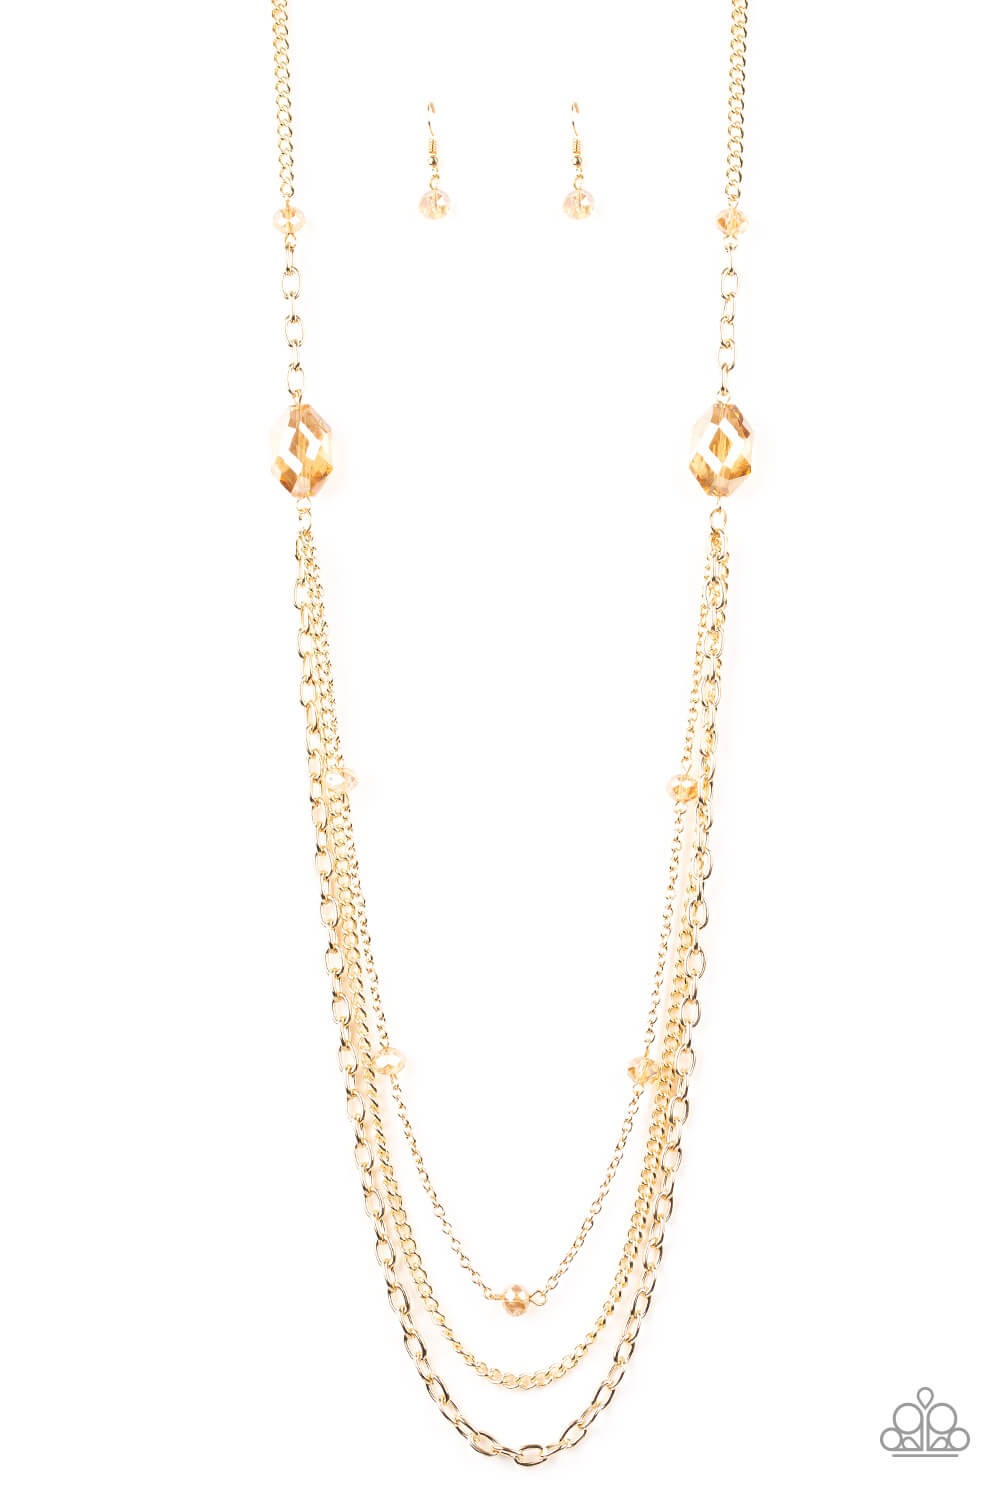 Dare To Dazzle - Gold Necklace Set - Princess Glam Shop